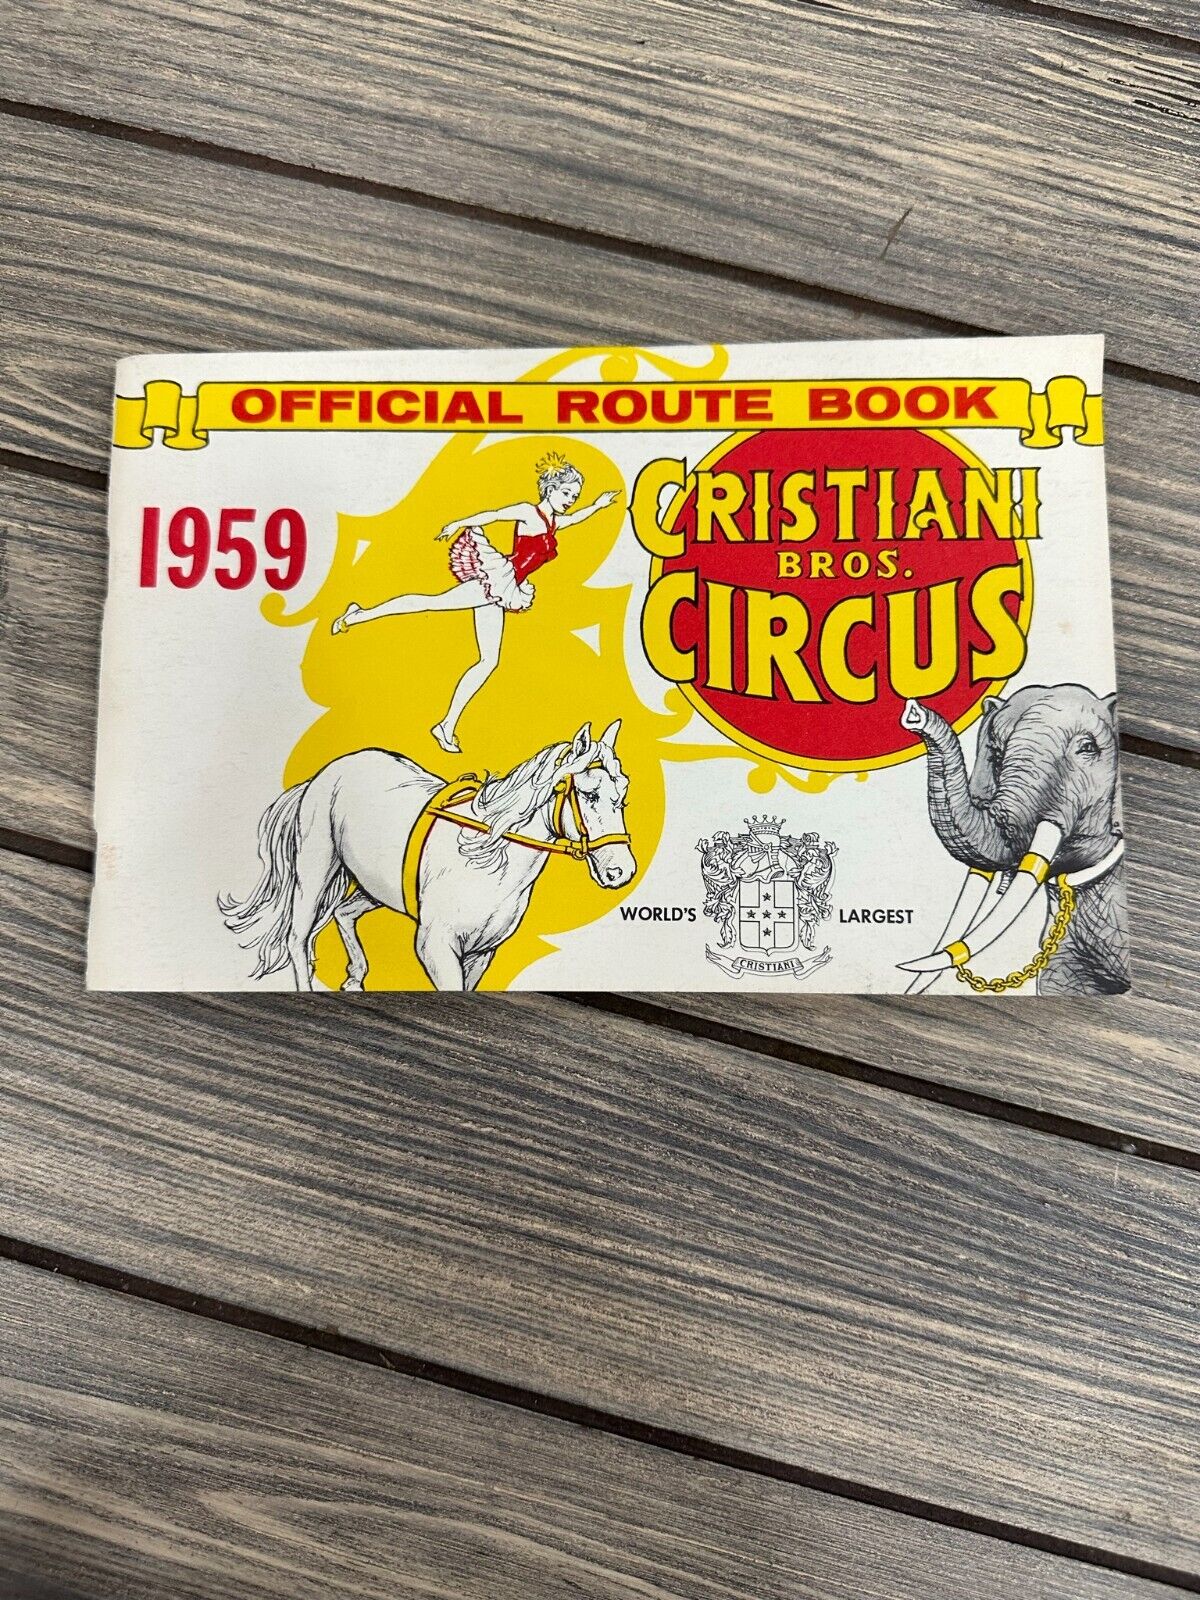 Vtg CRISTIANI BROS. CIRCUS 1959 RECORD AND ROUTE BOOK